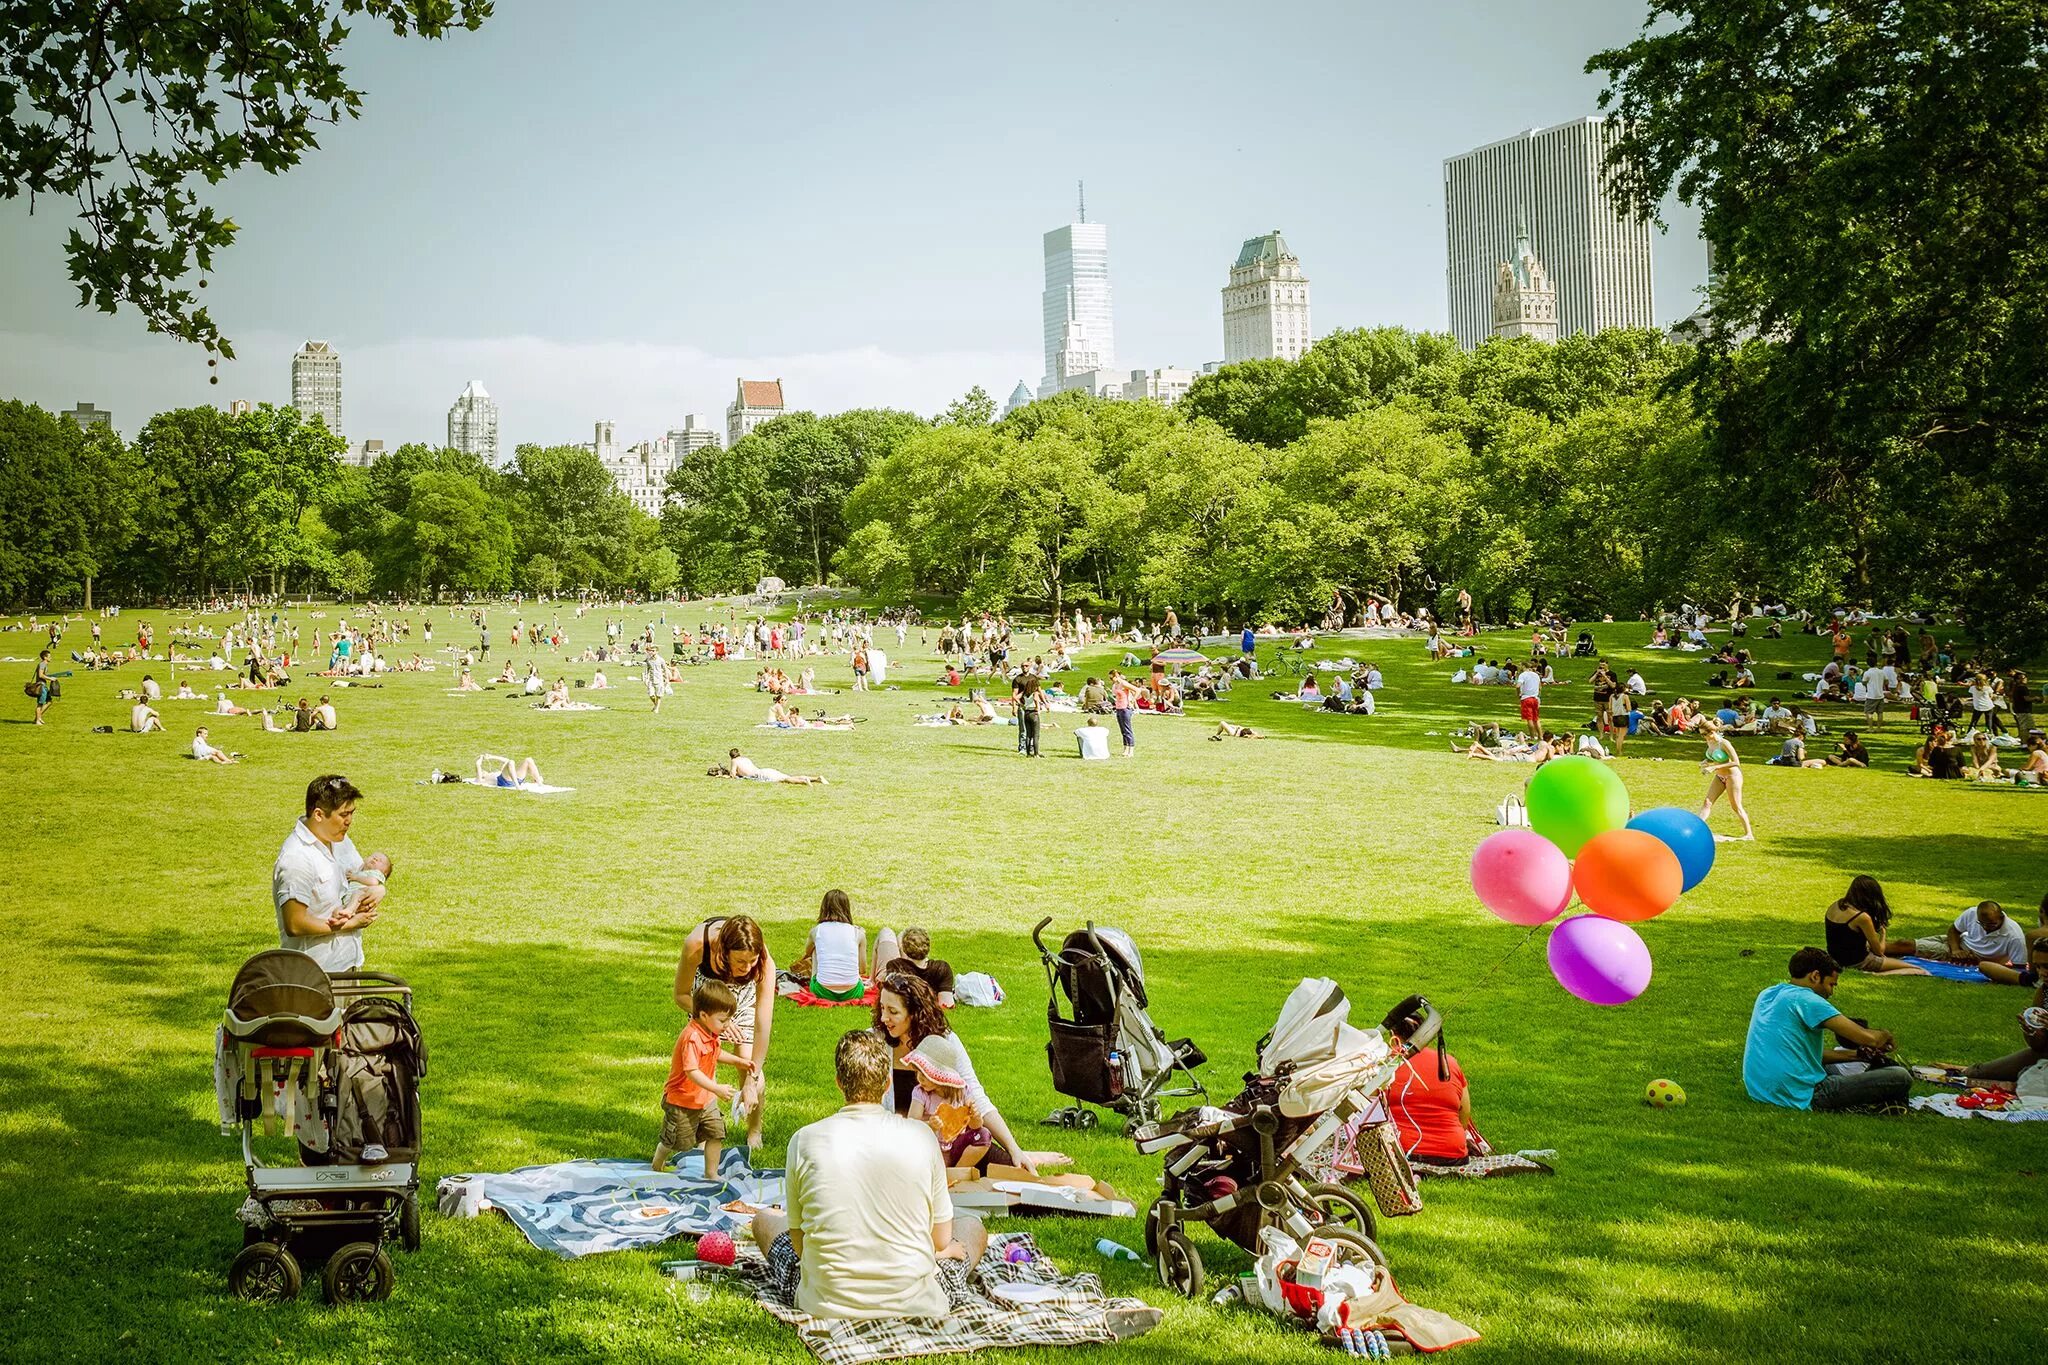 Park in. Центральный парк Нью-Йорк пикник. Централ парк Нью-Йорка газон. Большая лужайка в Центральном парке в Нью-Йорке. Парк США пикник на лужайке.